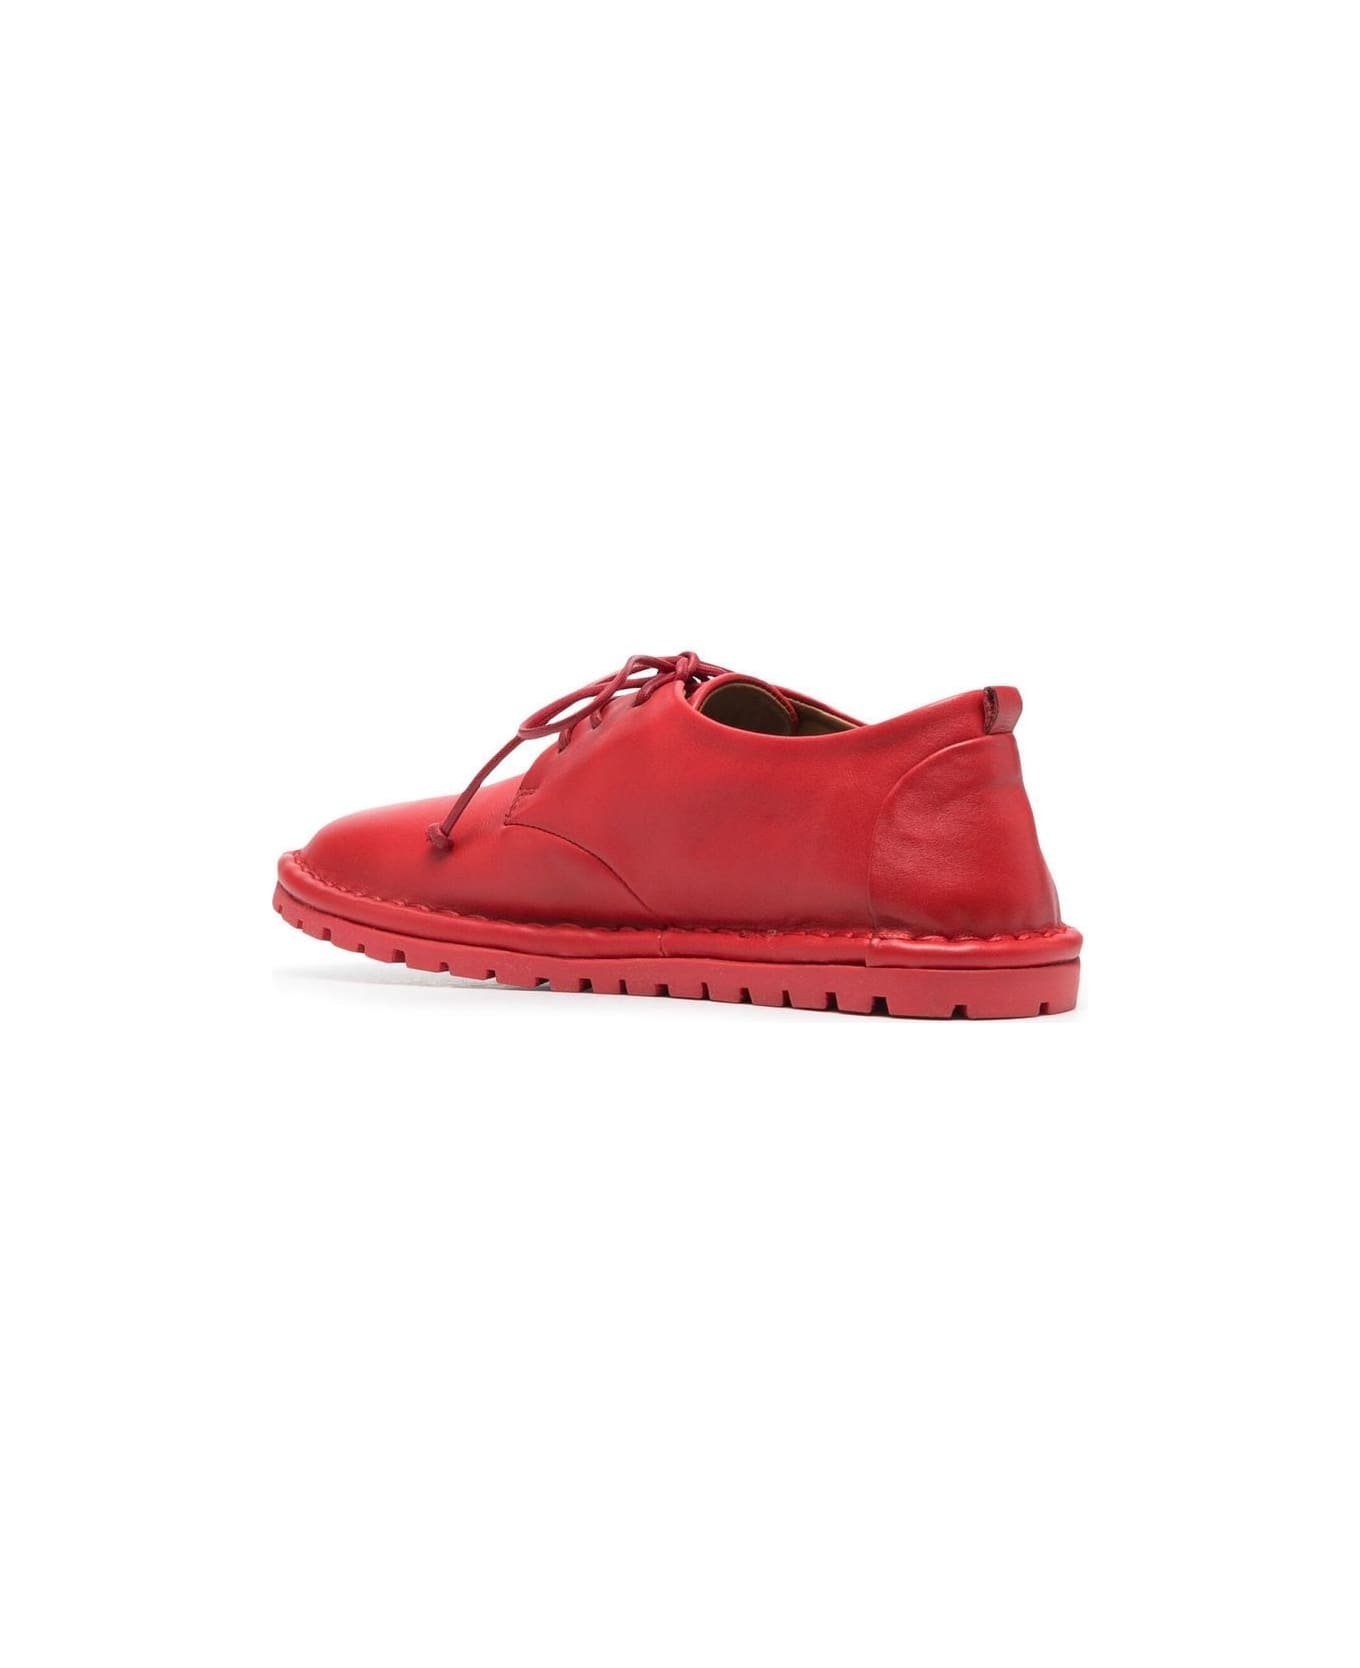 Marsell Sancrispa Derby Shoes - Red フラットシューズ